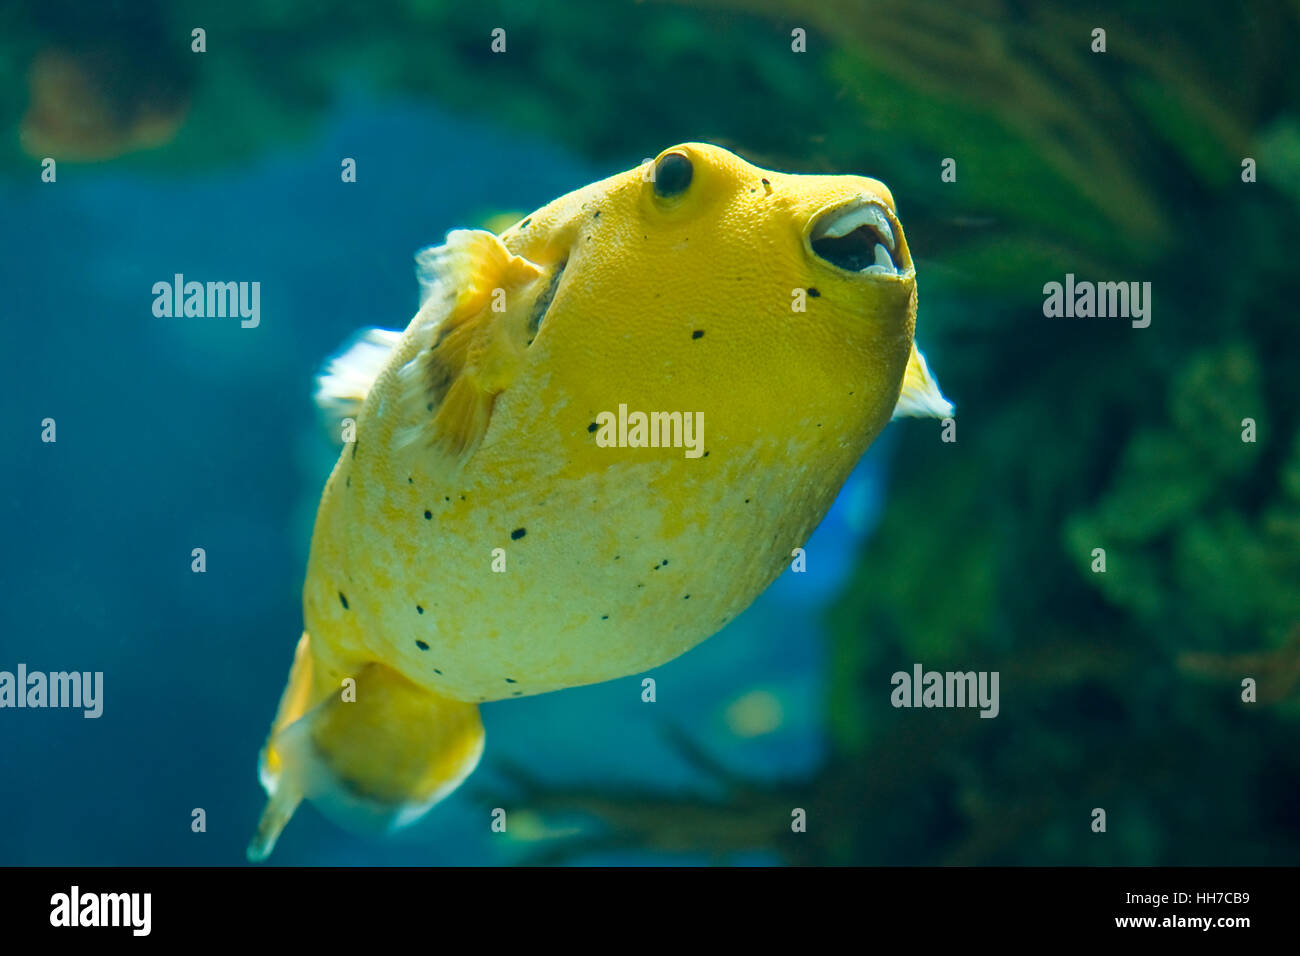 fish, animal, teeth, aquarium, underwater, tropical, salt water, sea, ocean, Stock Photo